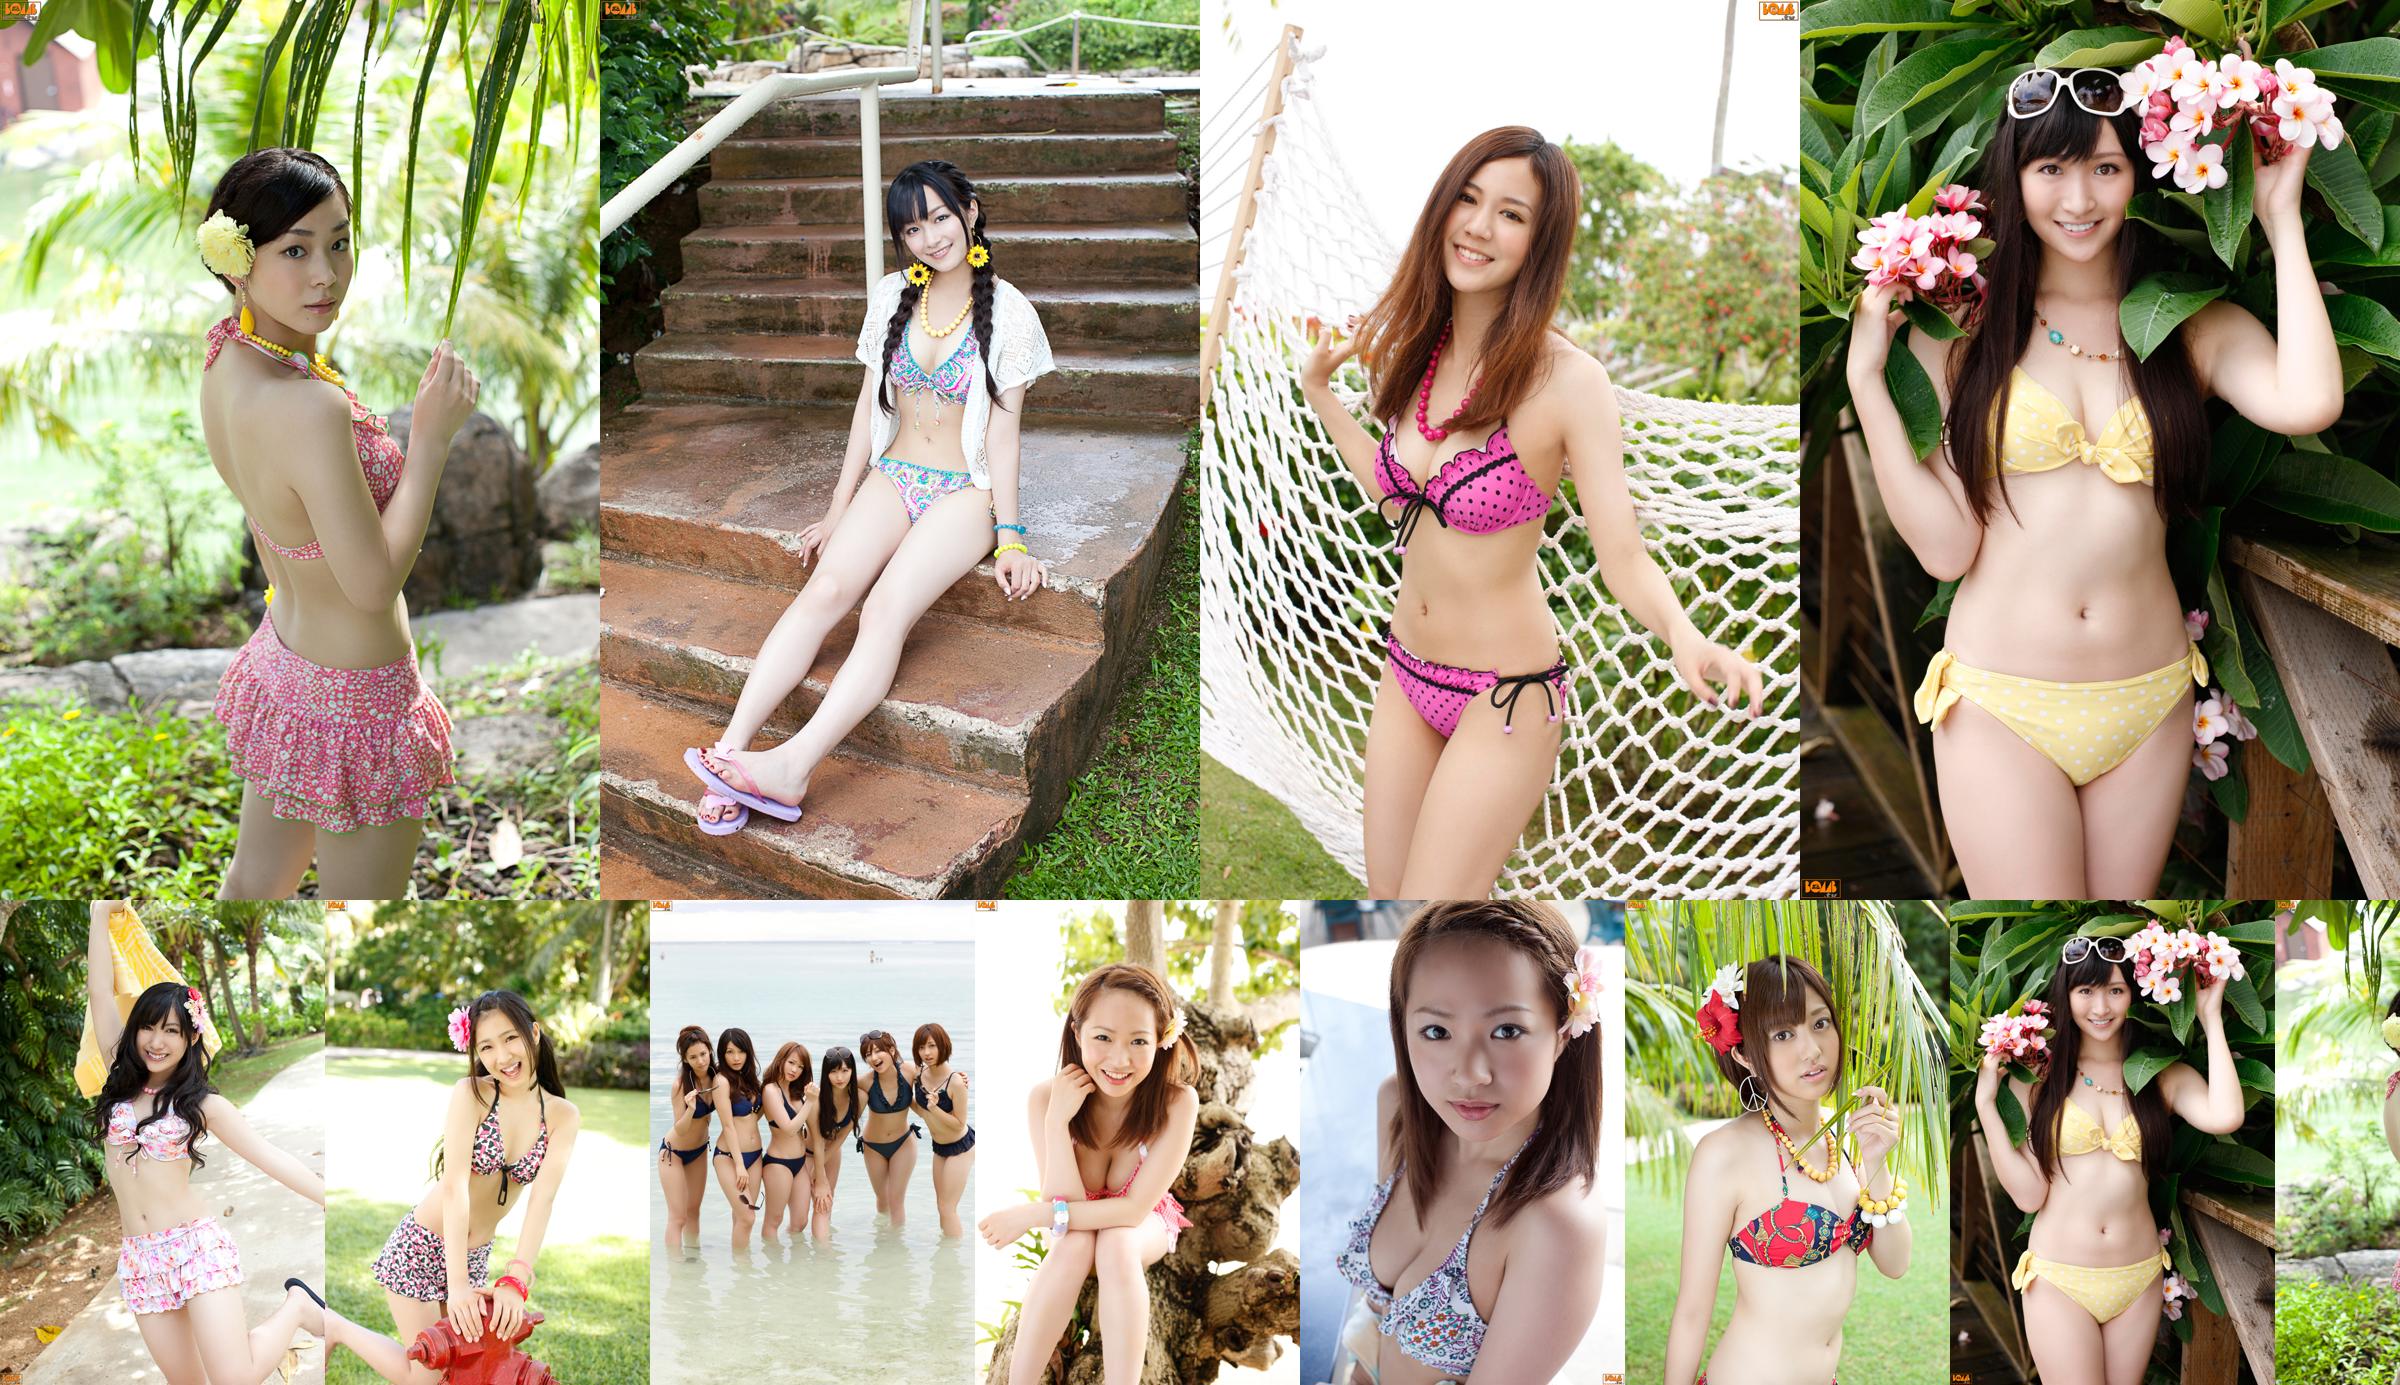 [Bomb.TV] Novembre 2011 Idolling beautiful girl group No.8c65e3 Pagina 1